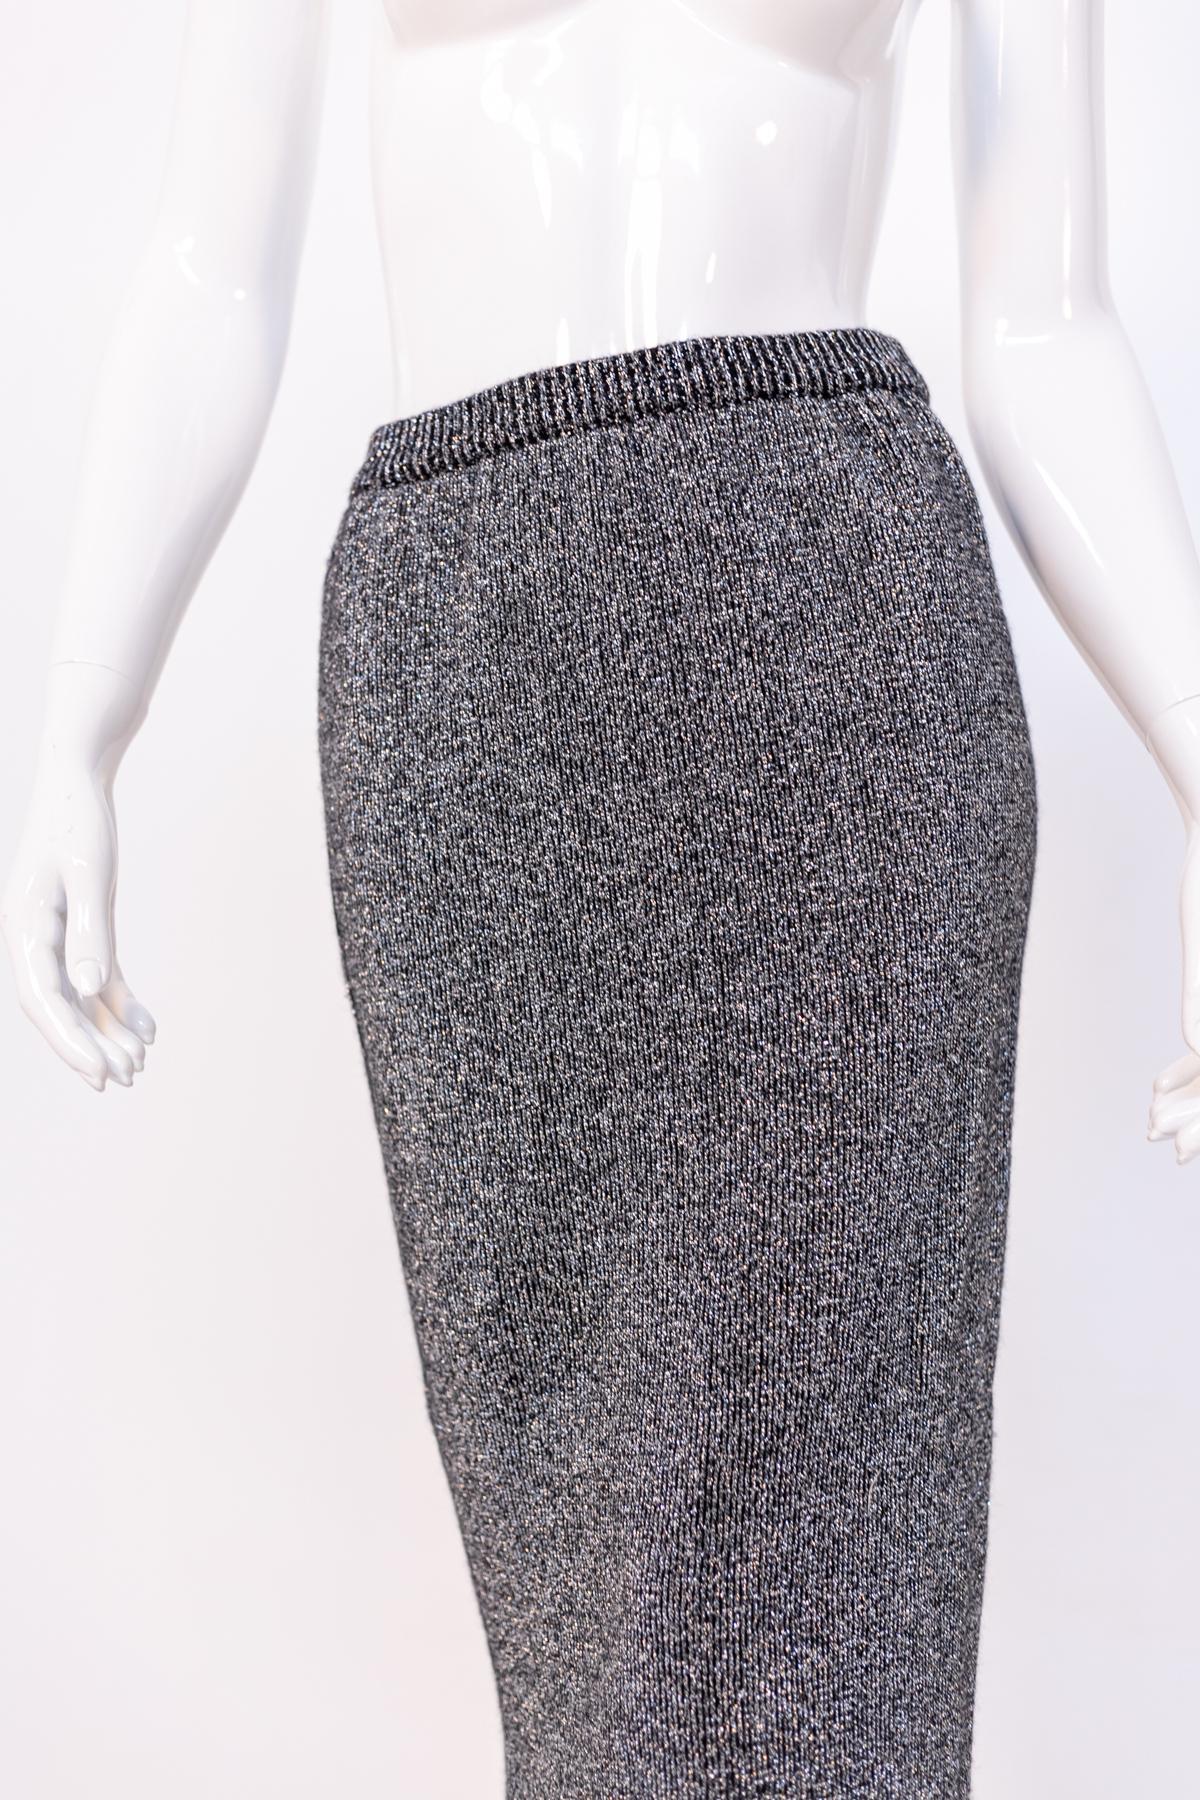 Krizia Casual Vintage Grey Long Skirt For Sale 6